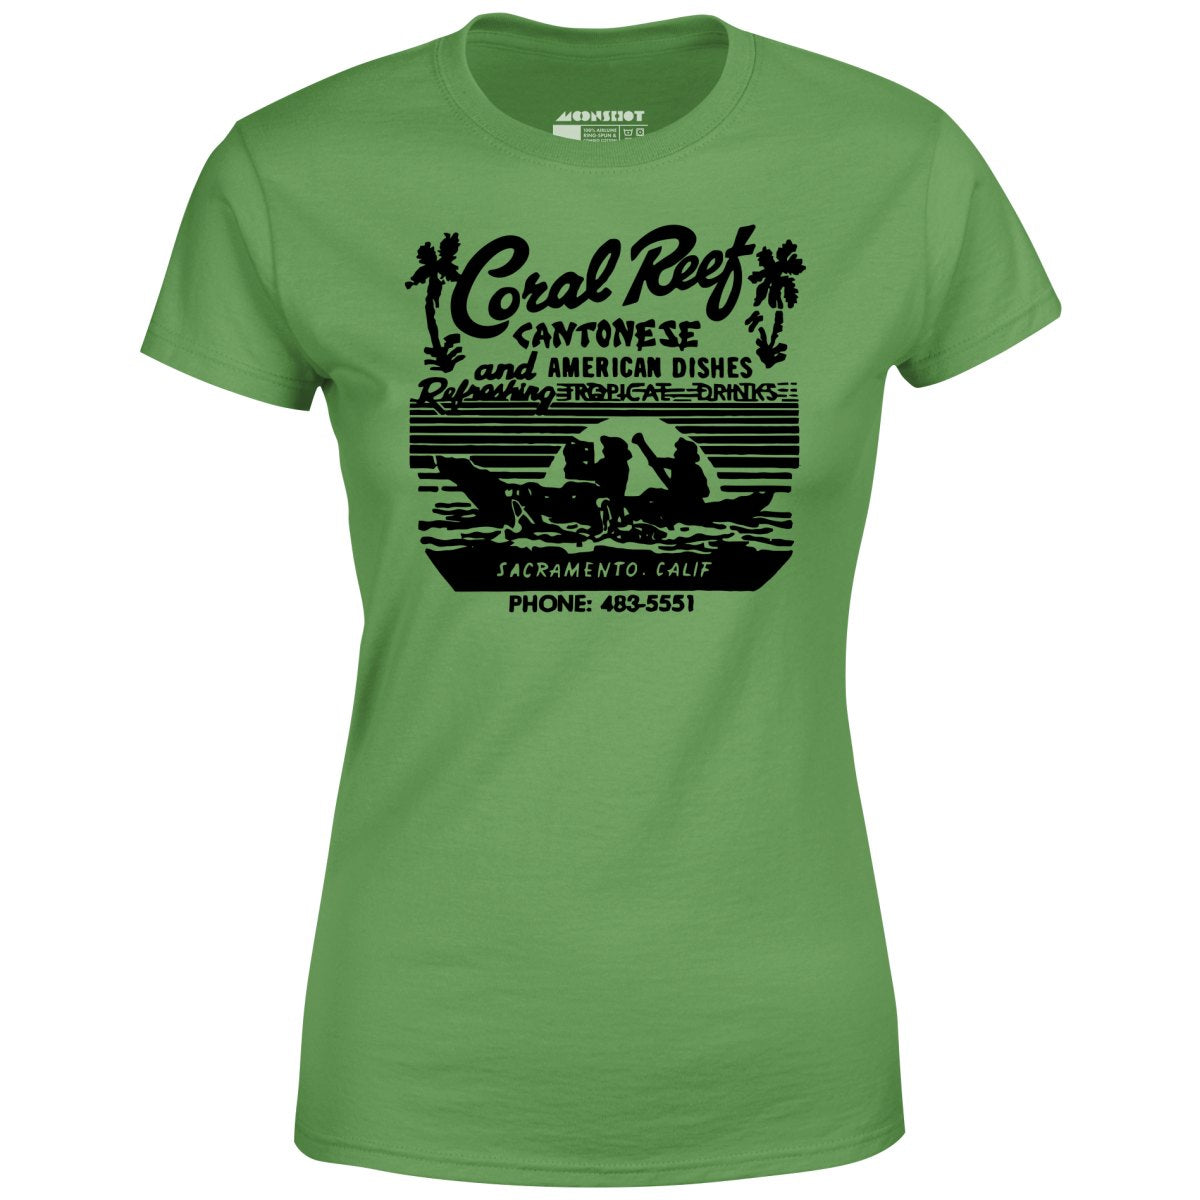 Coral Reef v2 - Sacramento, CA - Vintage Tiki Bar - Women's T-Shirt